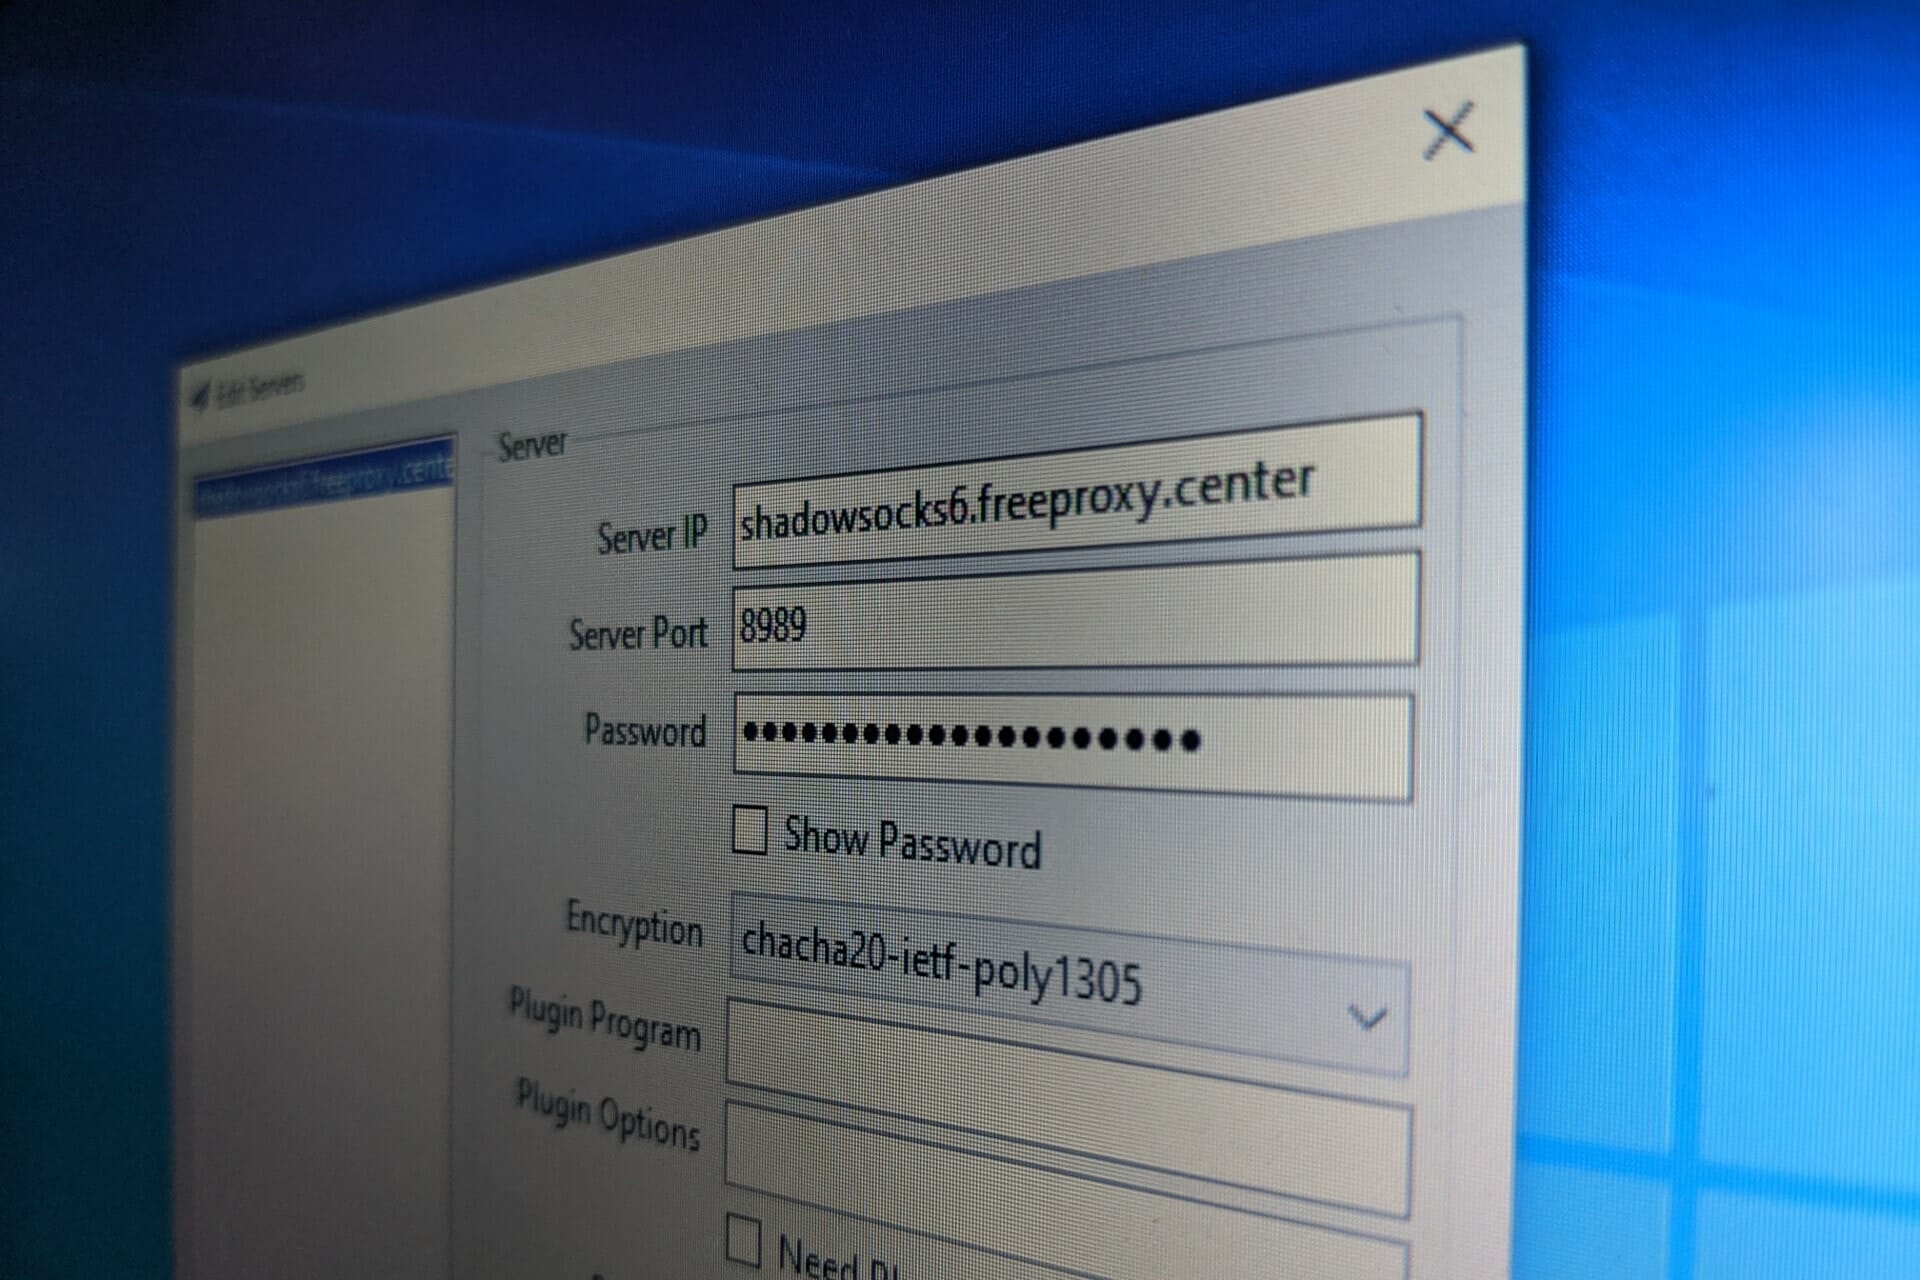 Windows 10 shows Shadowsocks